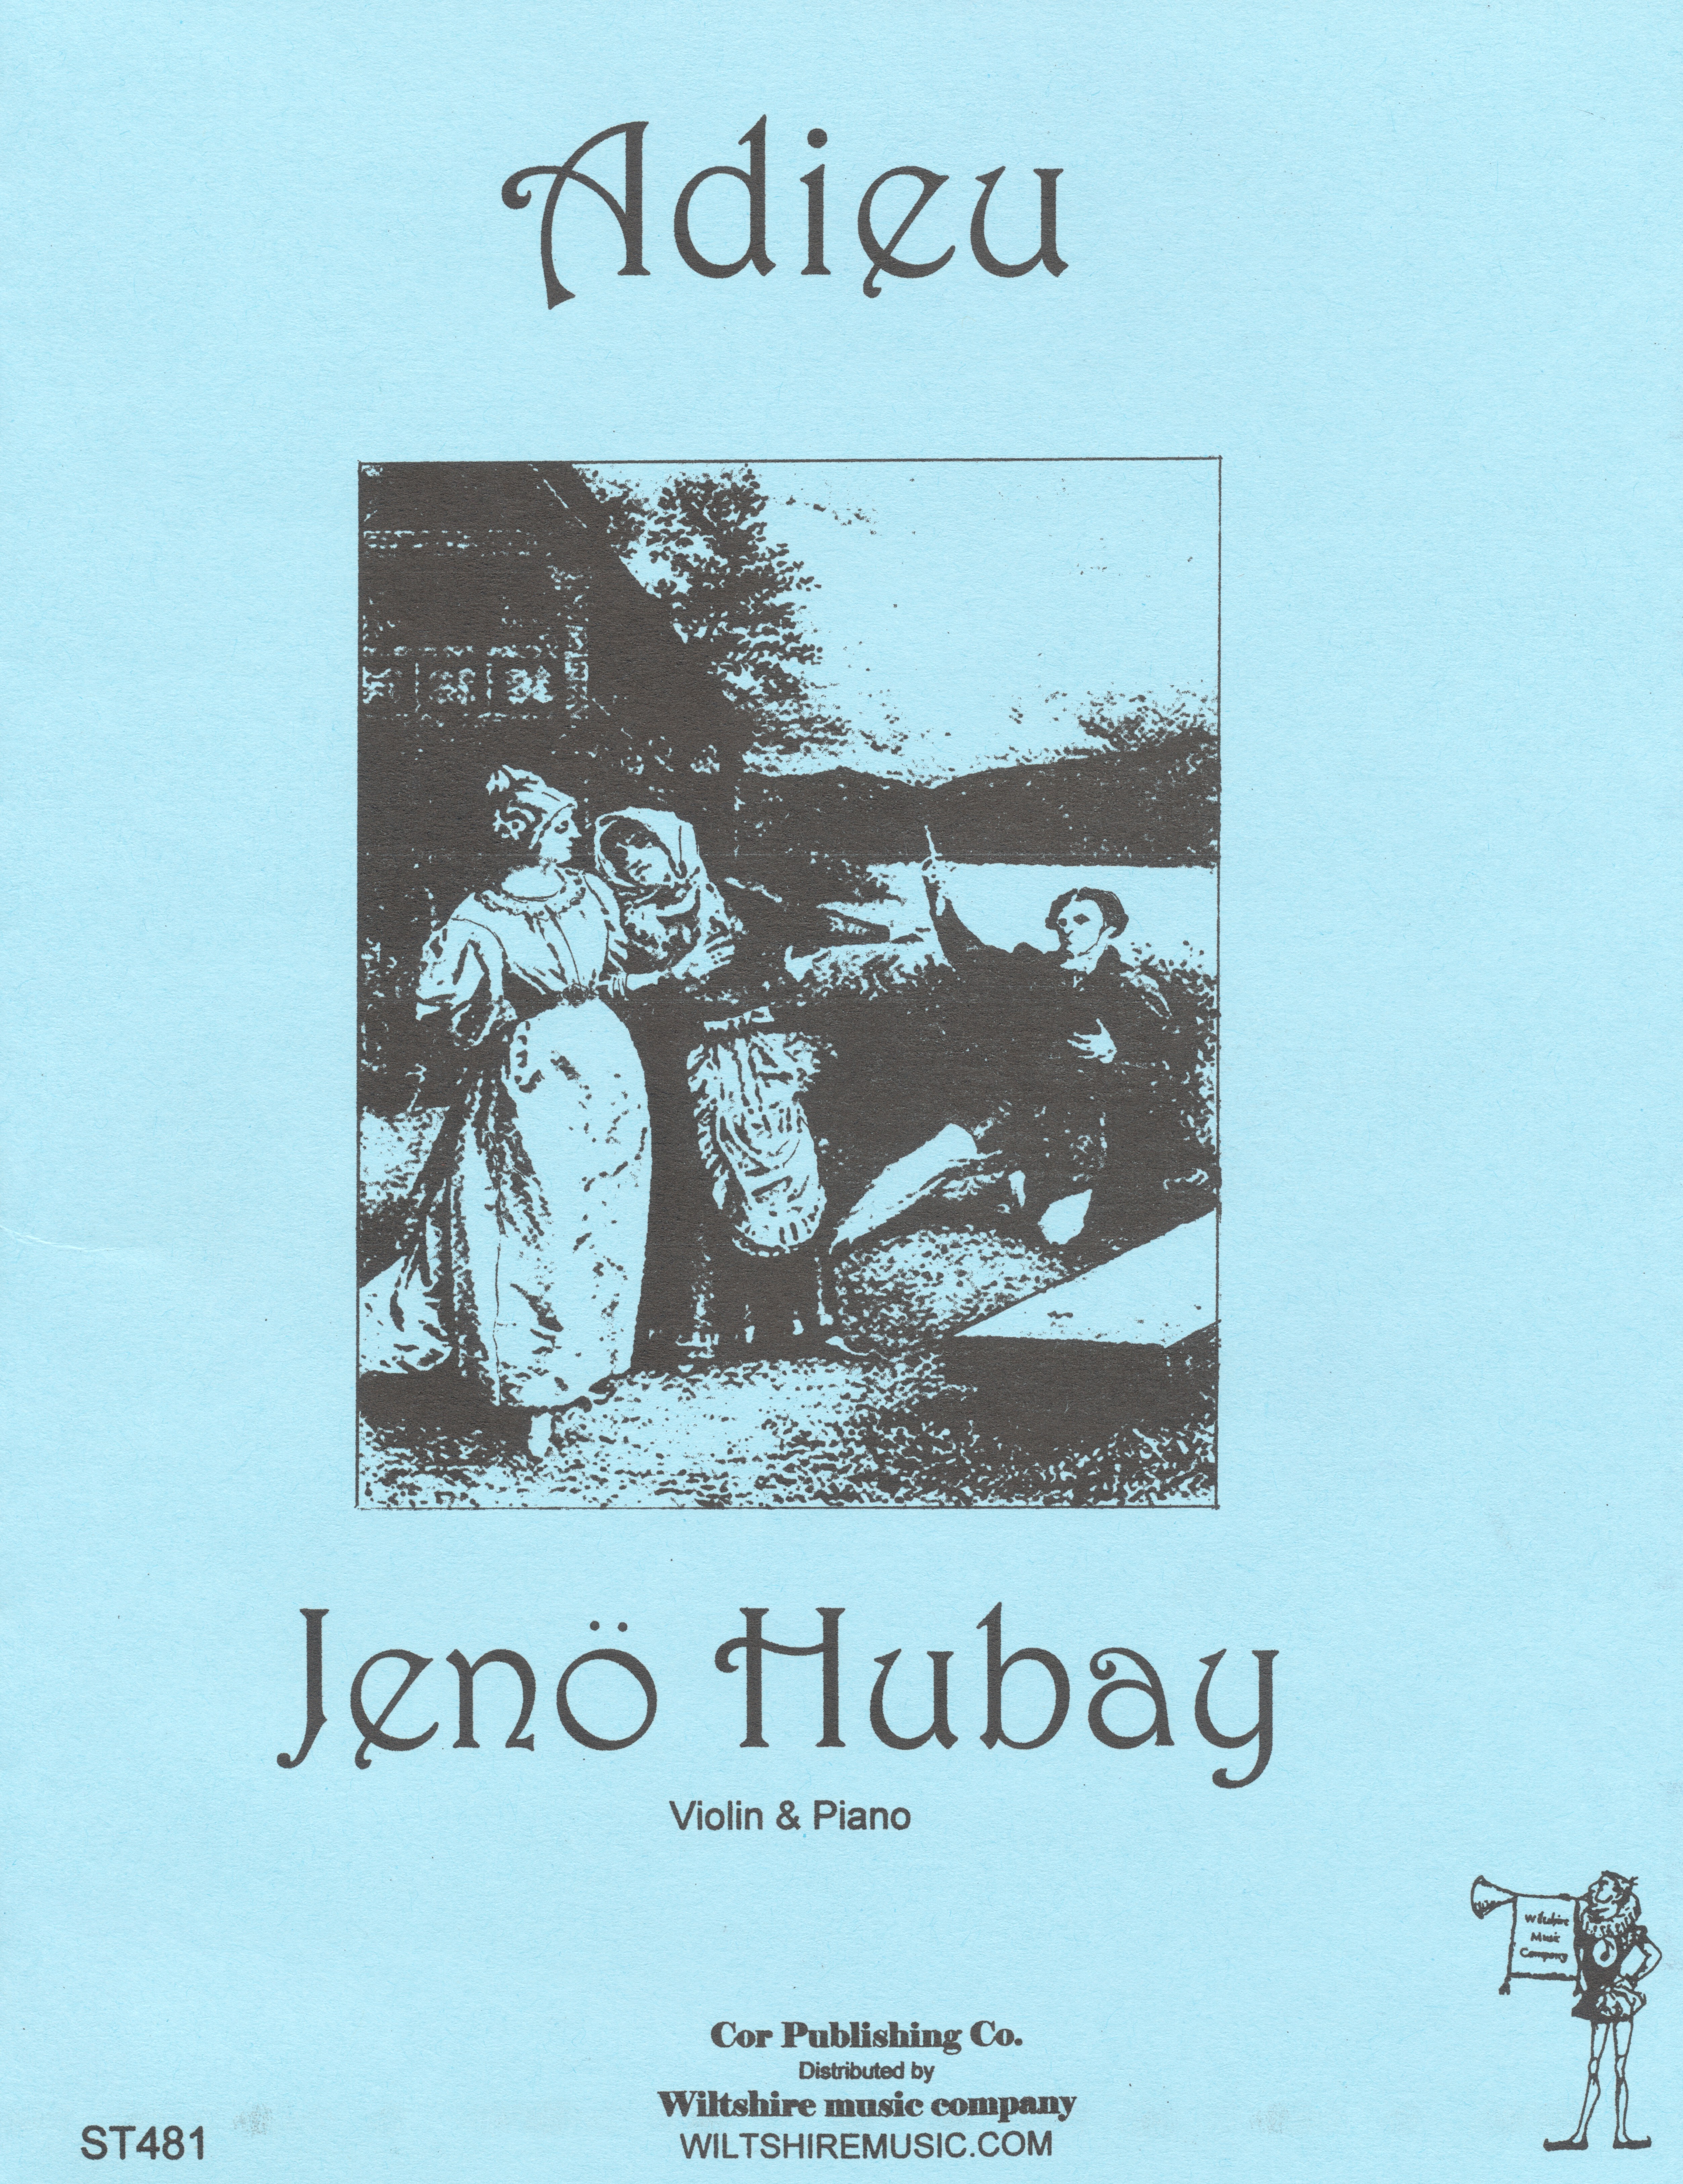 Adieu, Jeno Hubay, violin & piano